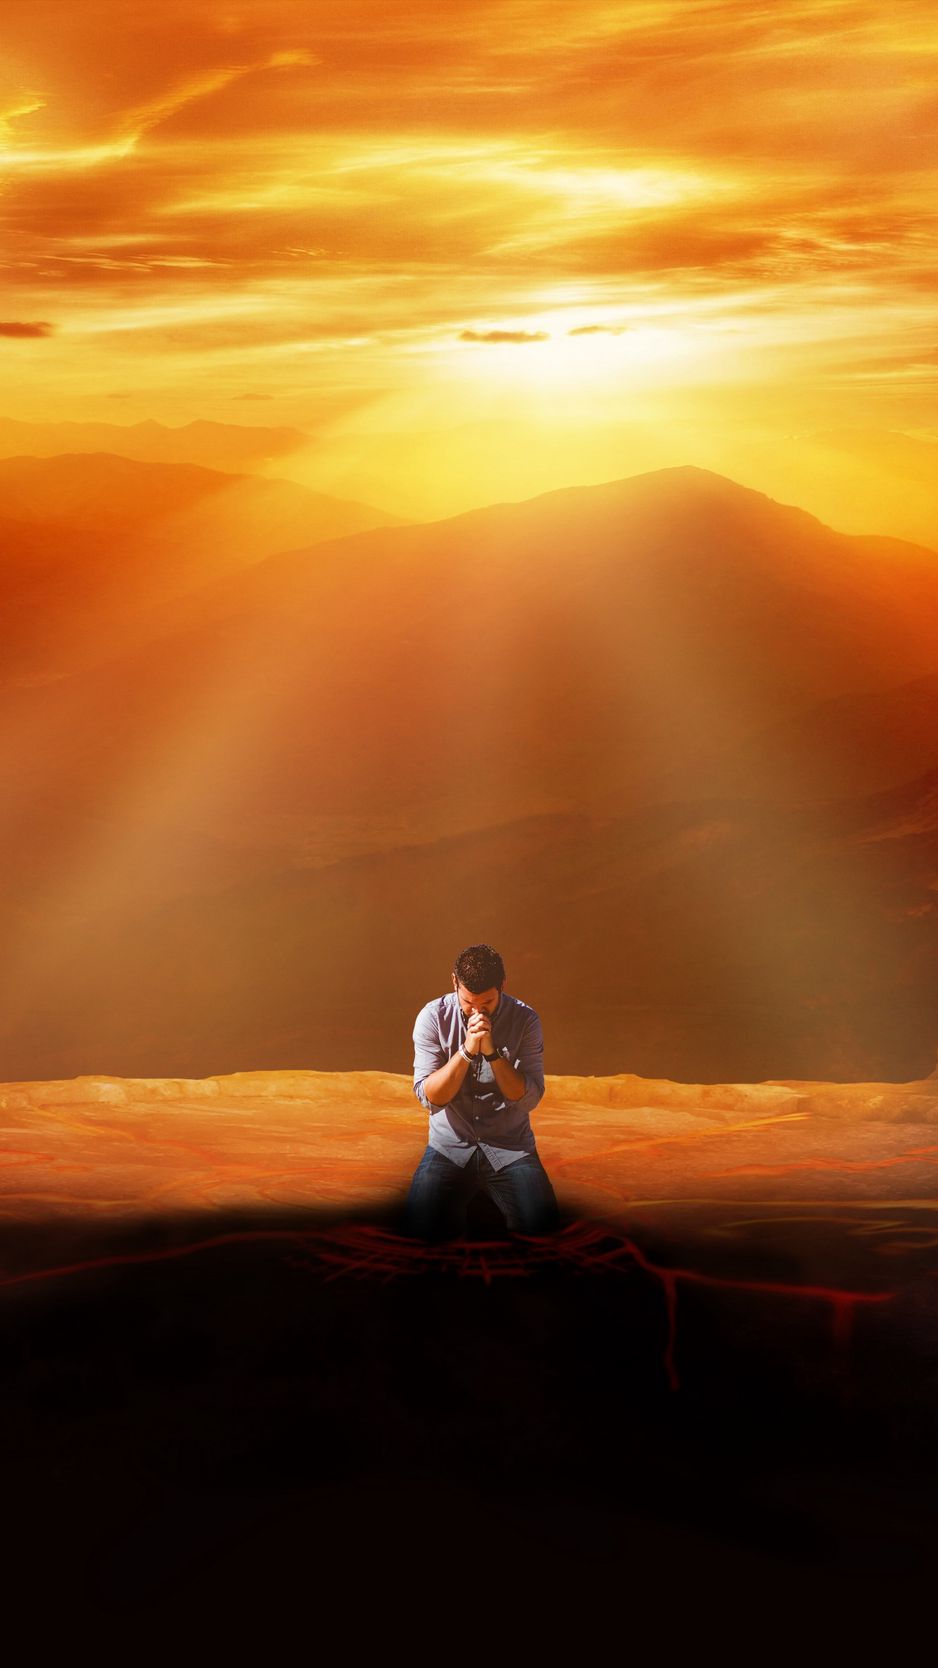 Download wallpaper 938x1668 man, prayer, faith, sunset iphone 8/7/6s/6 for  parallax hd background